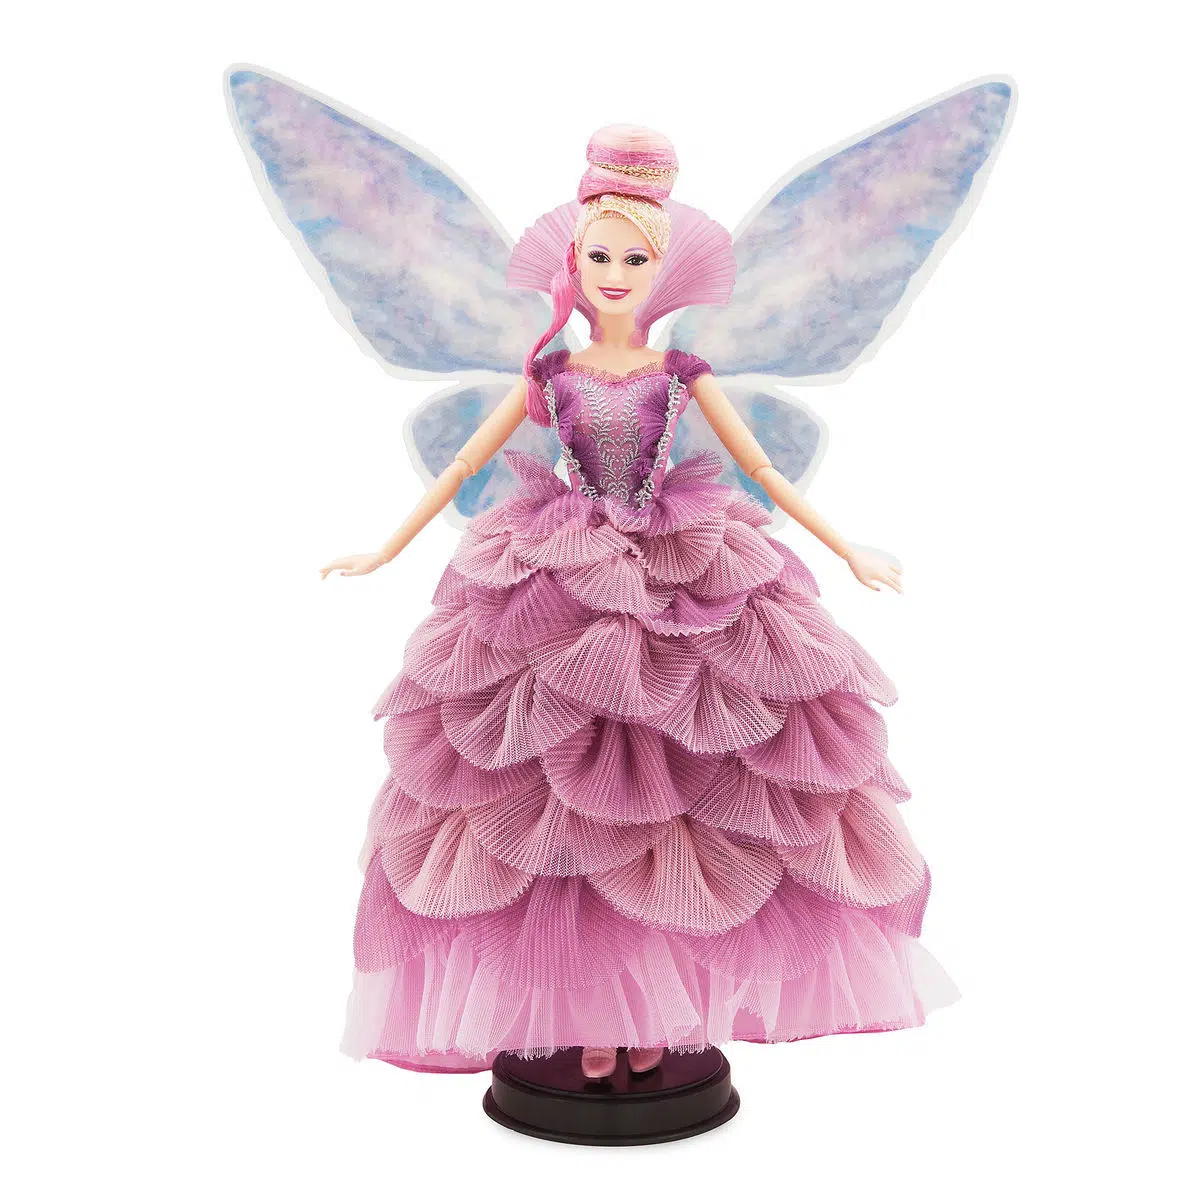 Barbie Sugar Plum Fairy Doll | The Nutcracker and the Four Realms